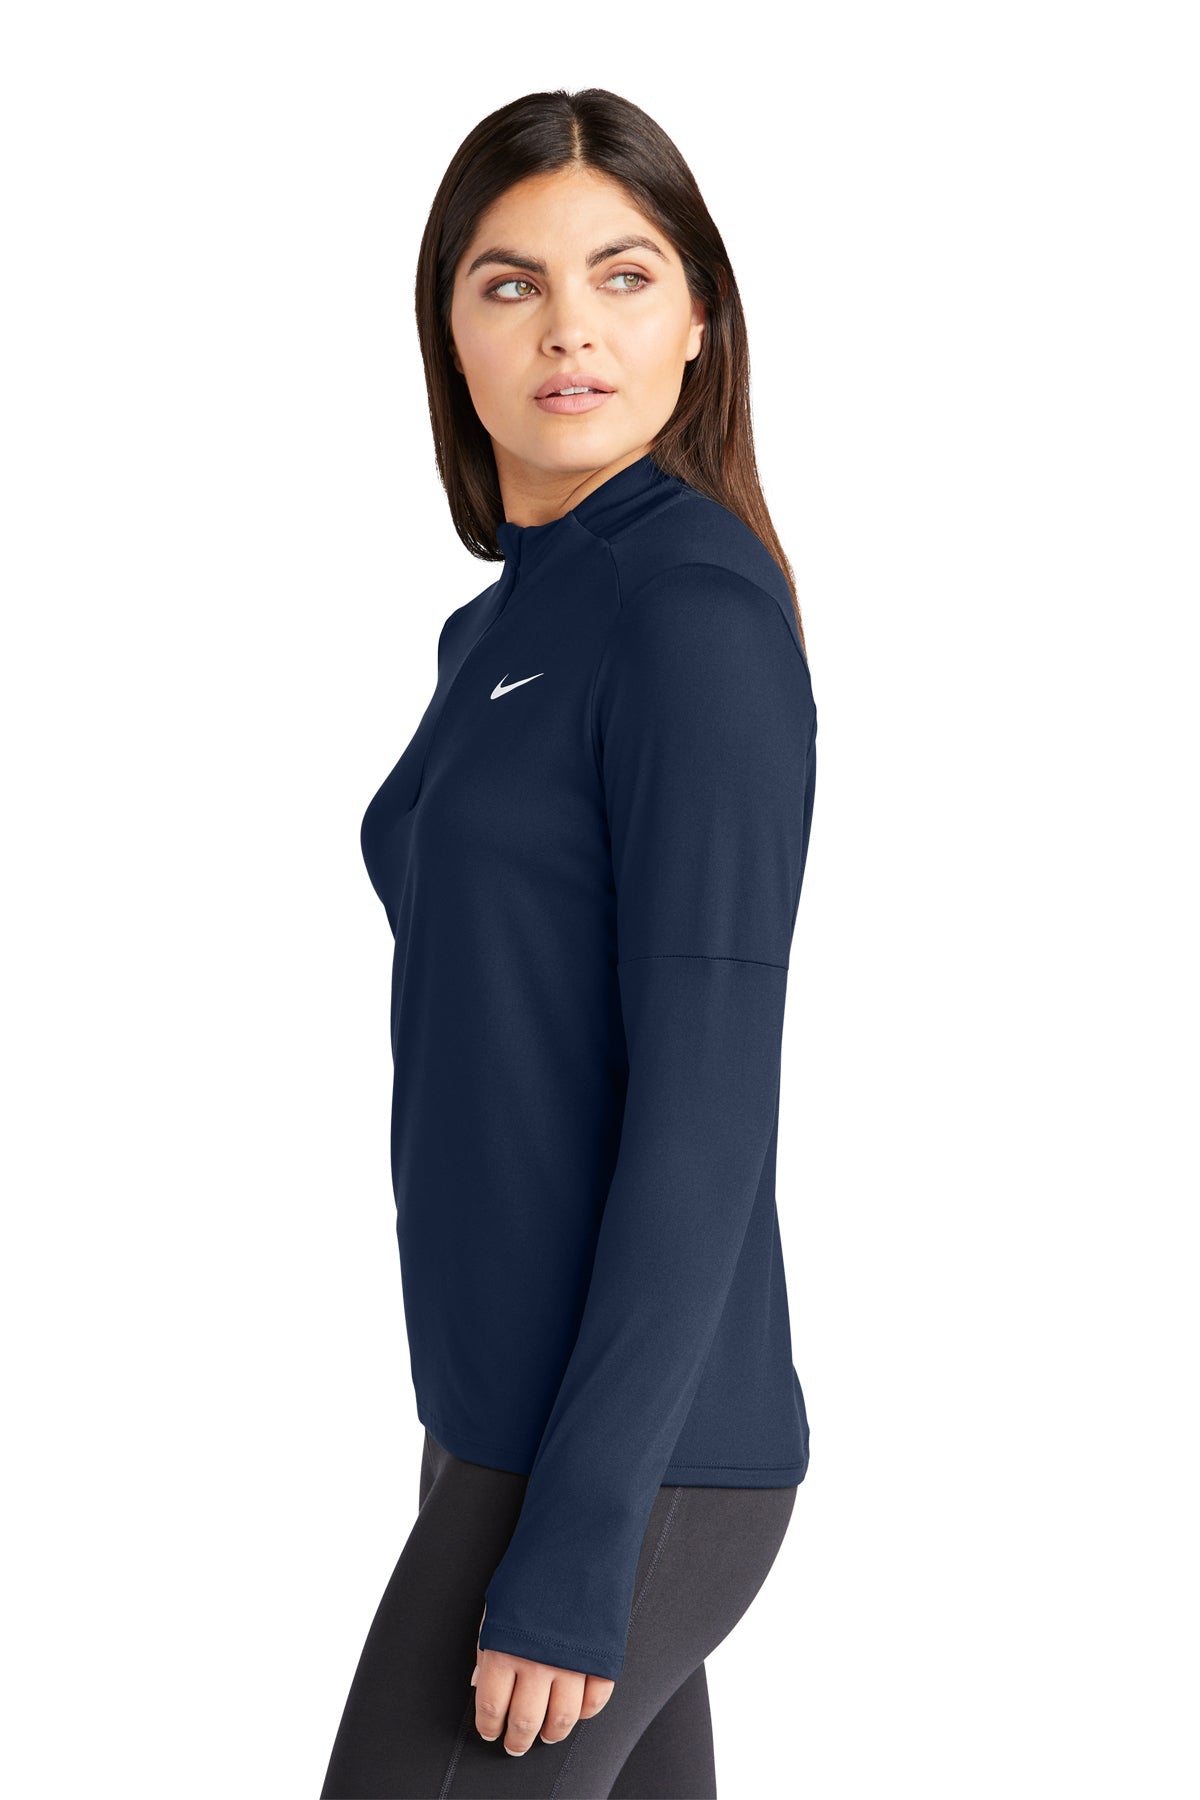 Nike Ladies Dri-FIT Element Custom Quarter Zips, Top Navy